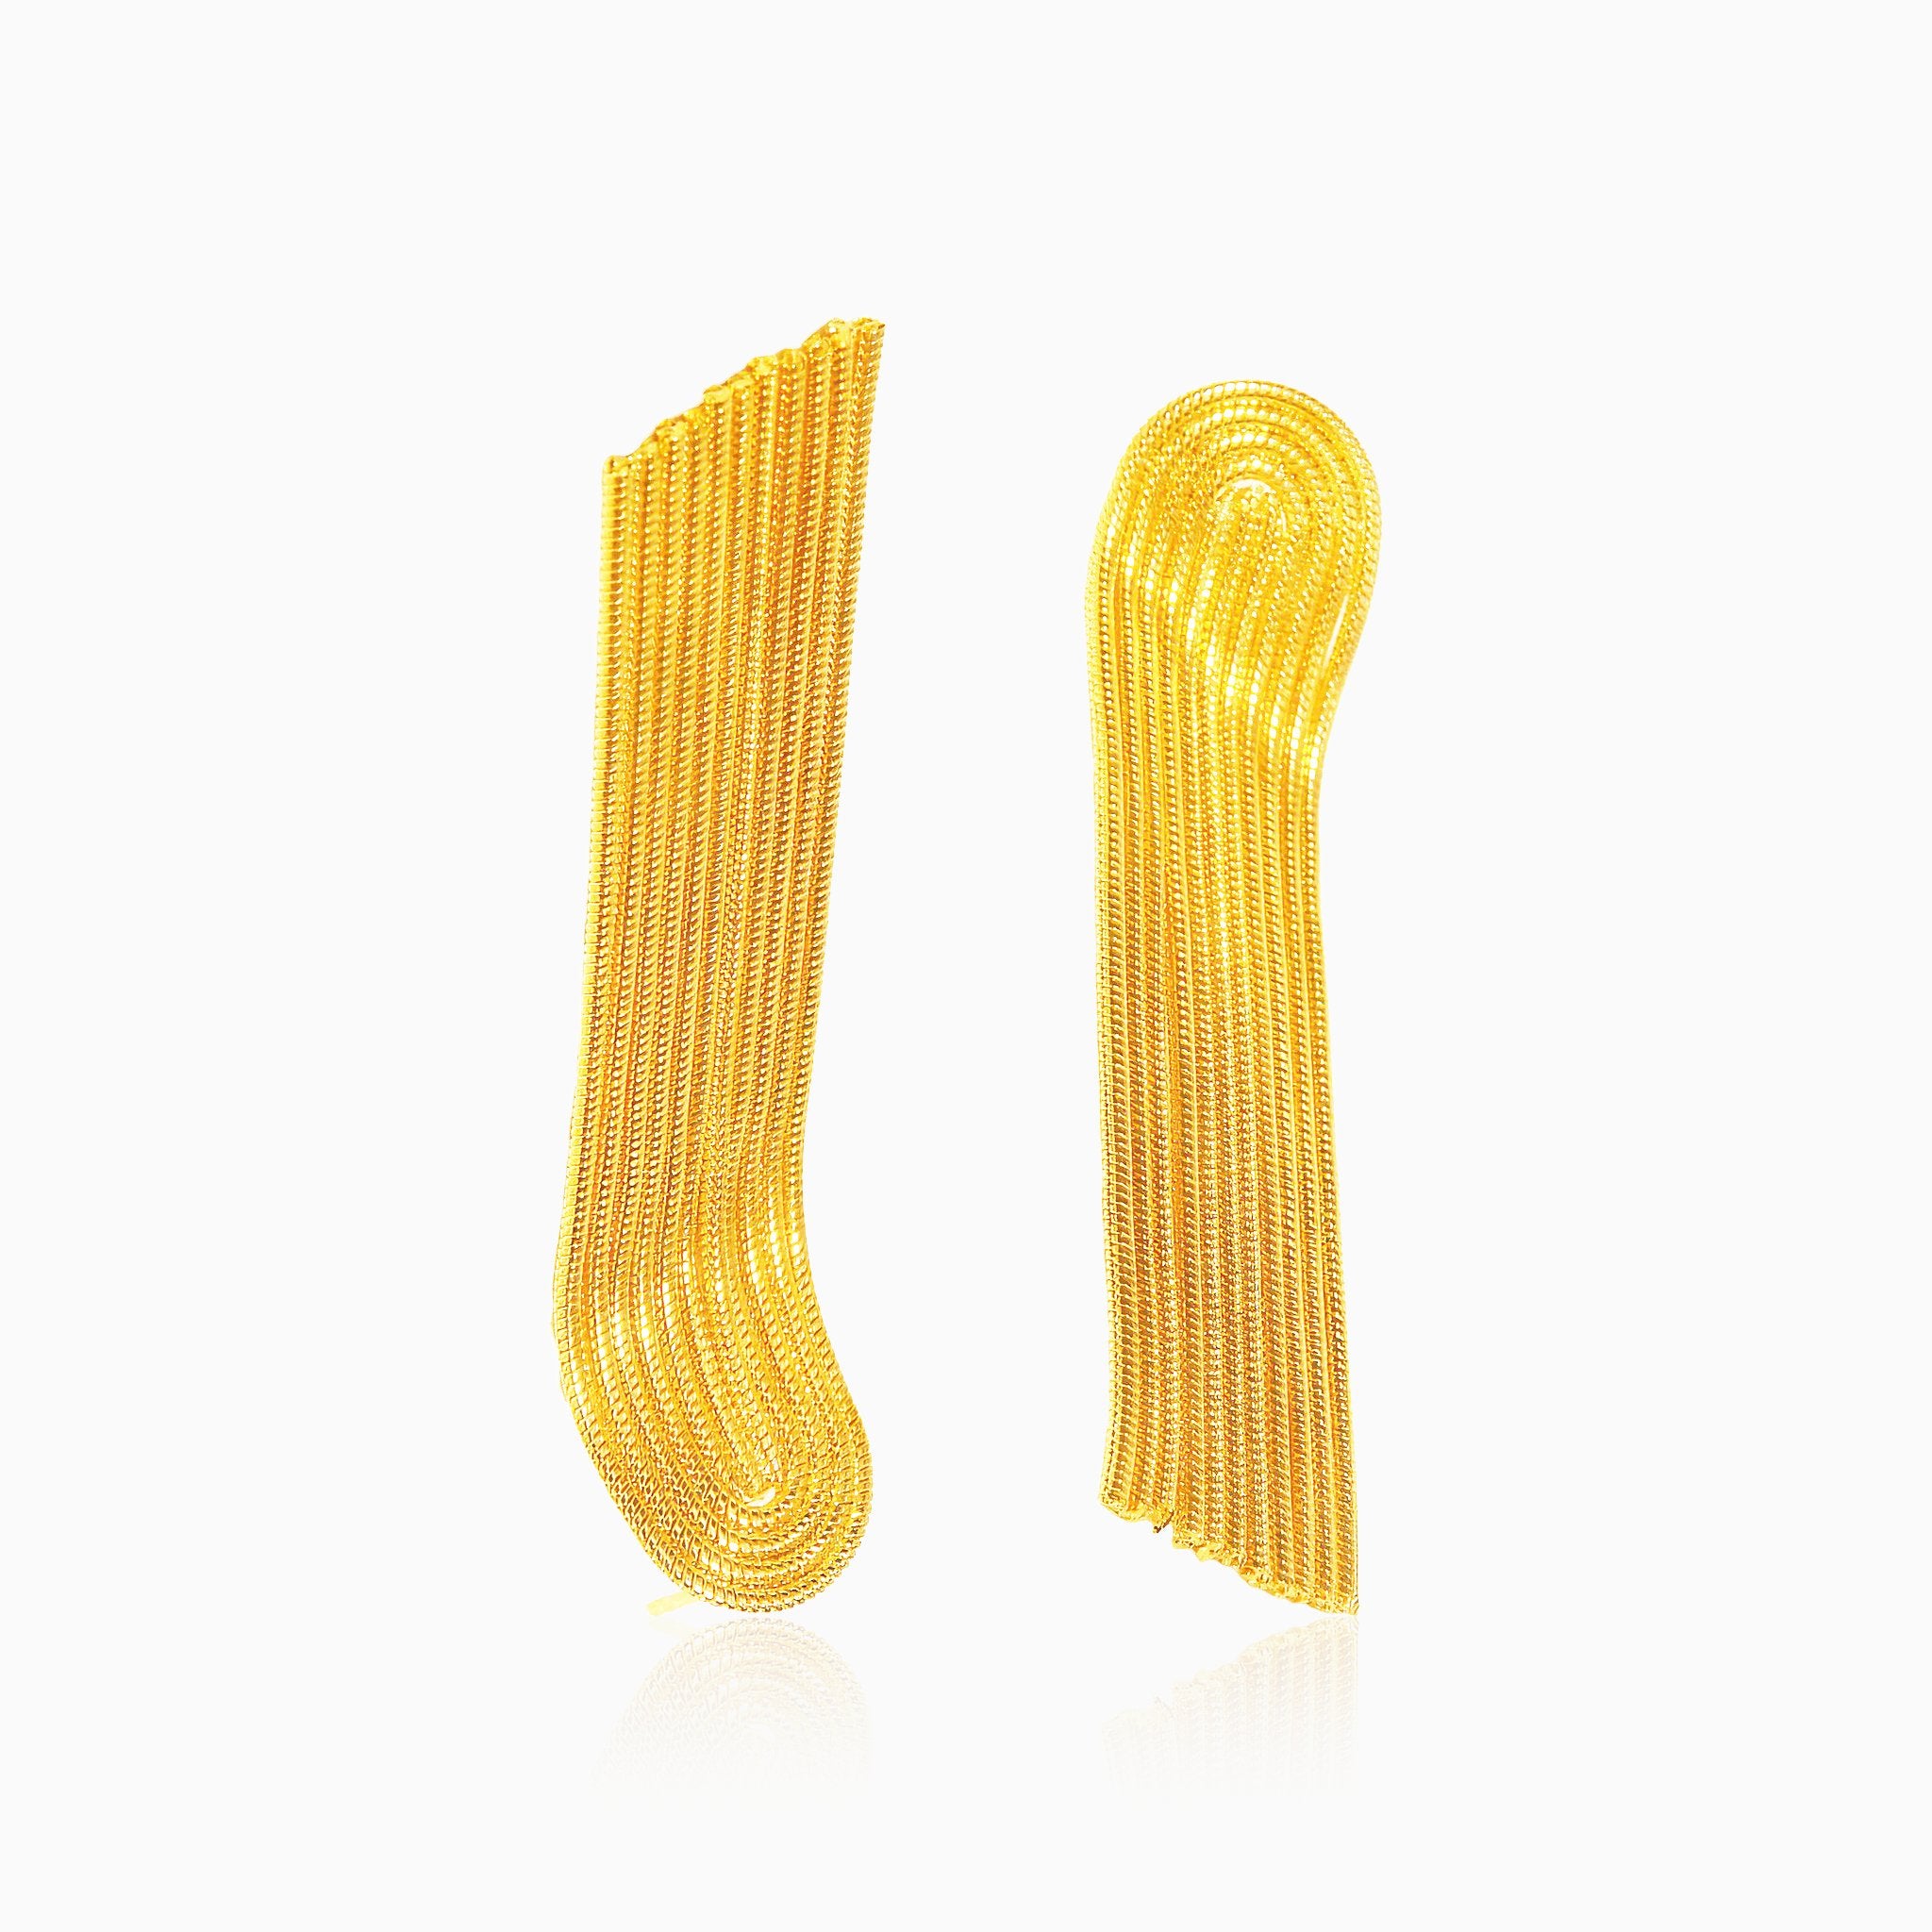 Tassel Design Earrings - Nobbier - Earrings - 18K Gold And Titanium PVD Coated Jewelry